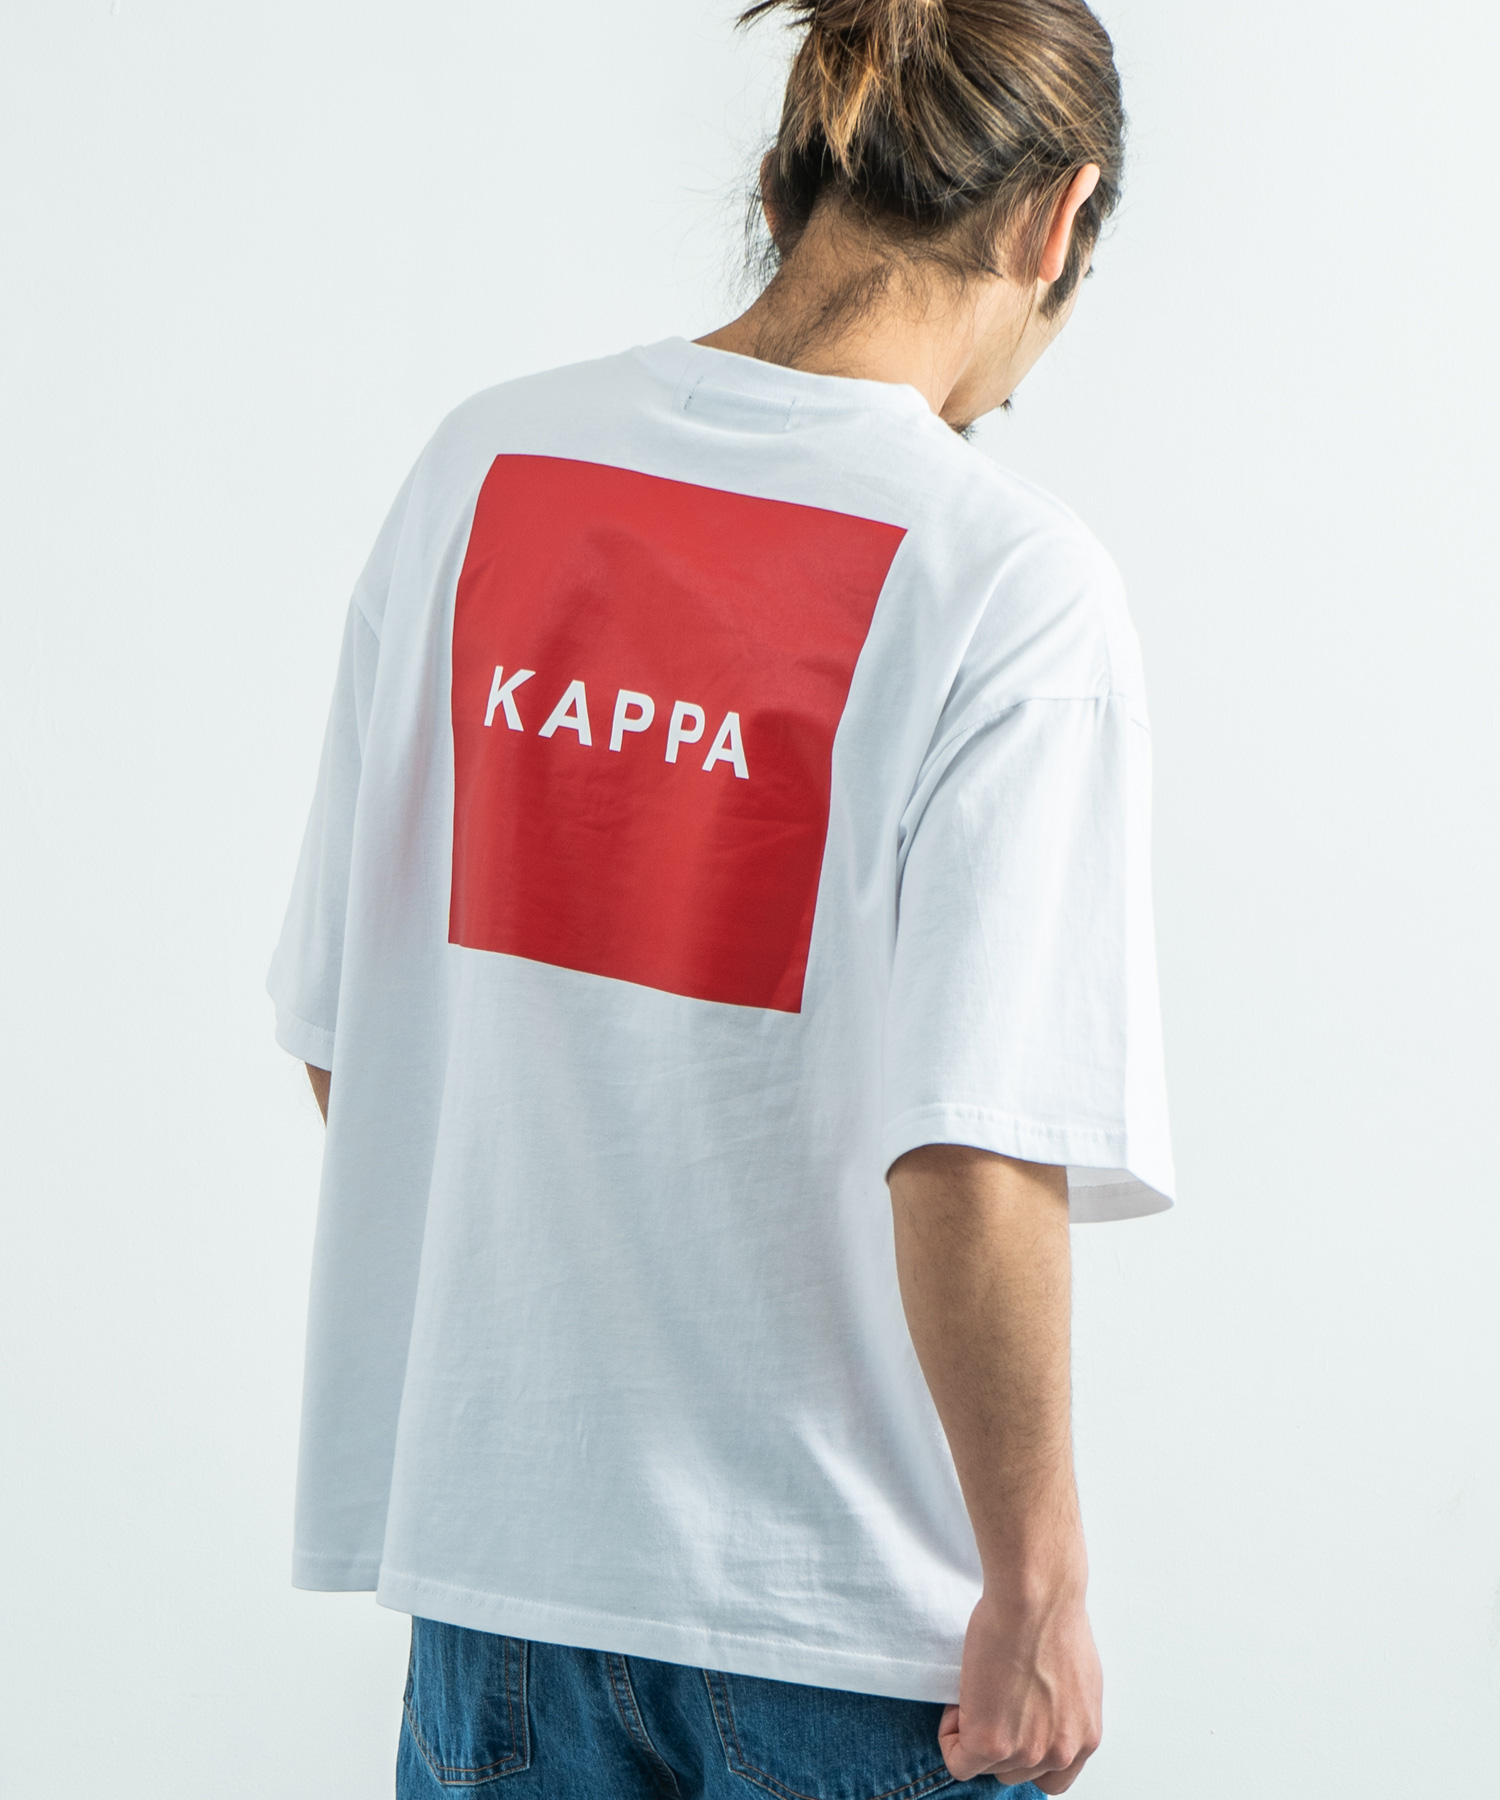 Kappa カッパ Tシャツ メンズ レディース ブランドロゴ 白 半袖 バック 